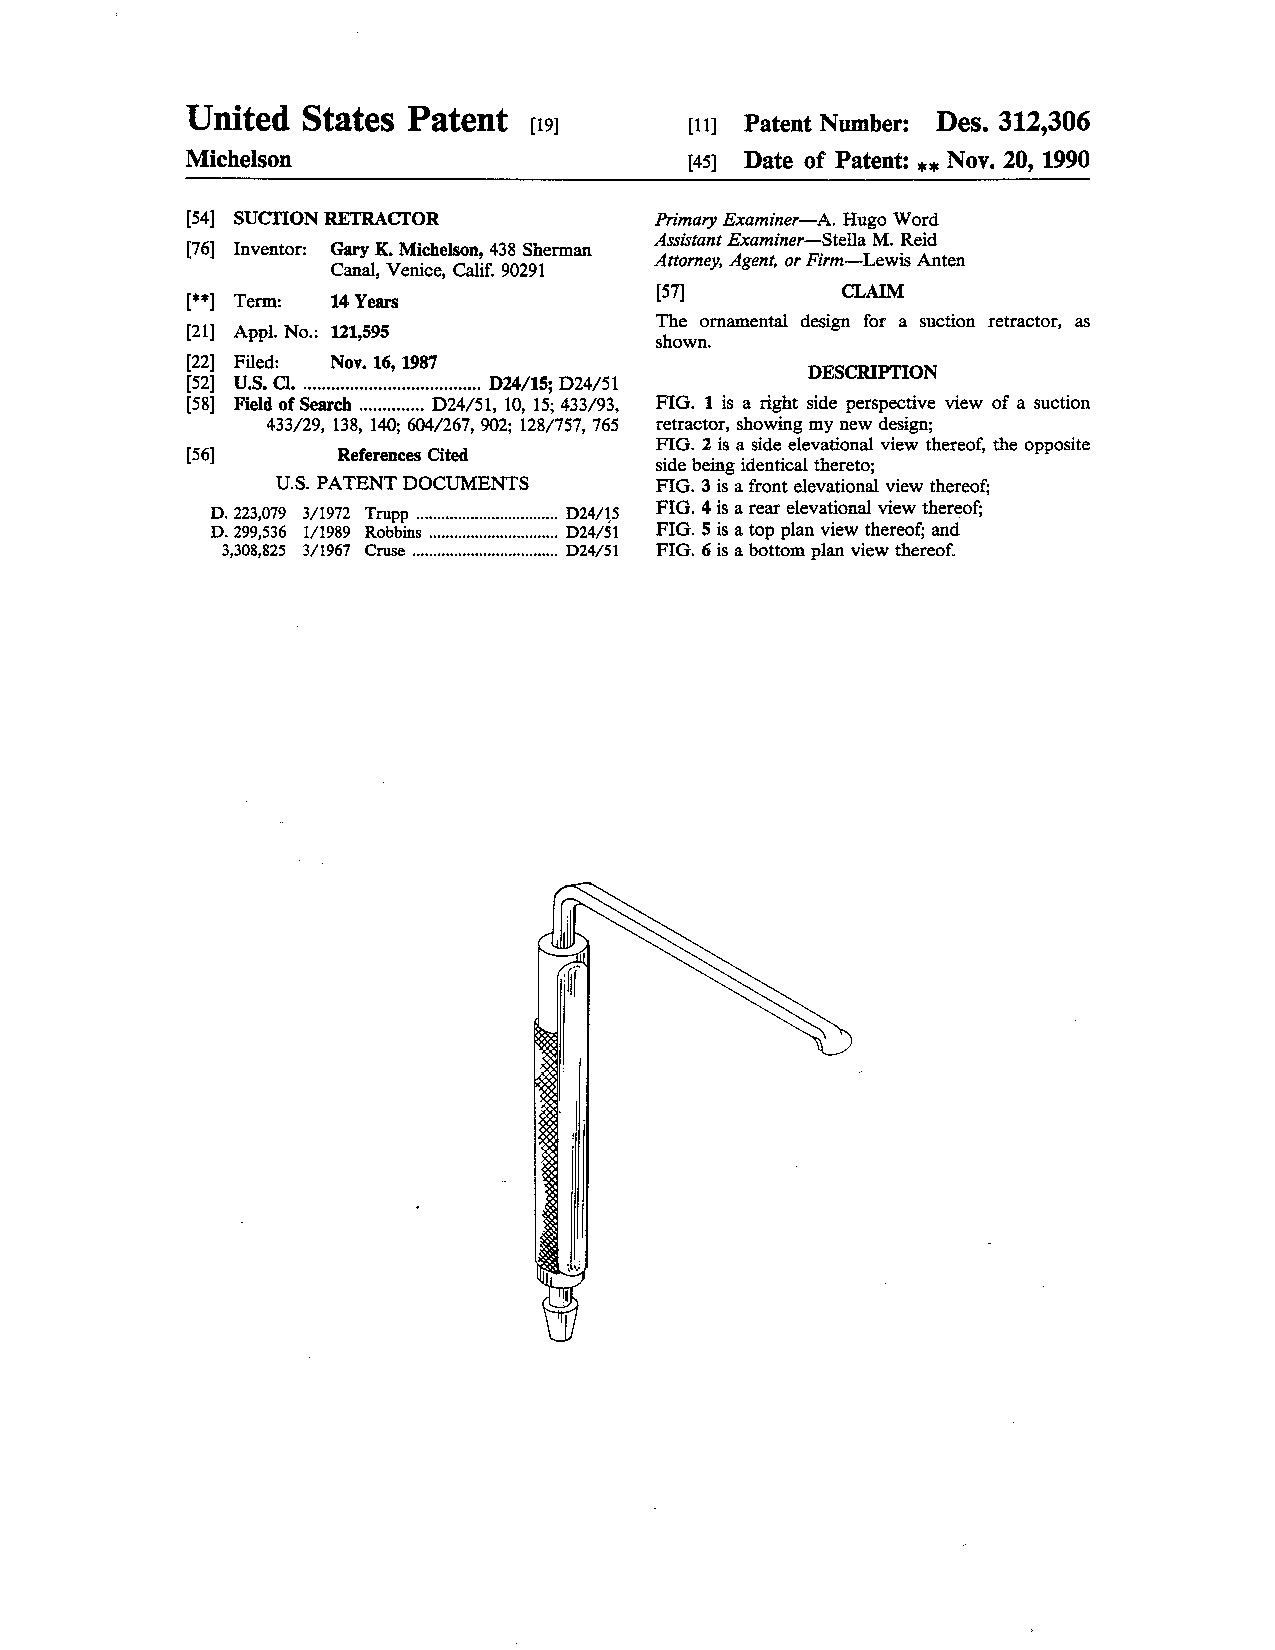 Suction retractor - Patent D312,306